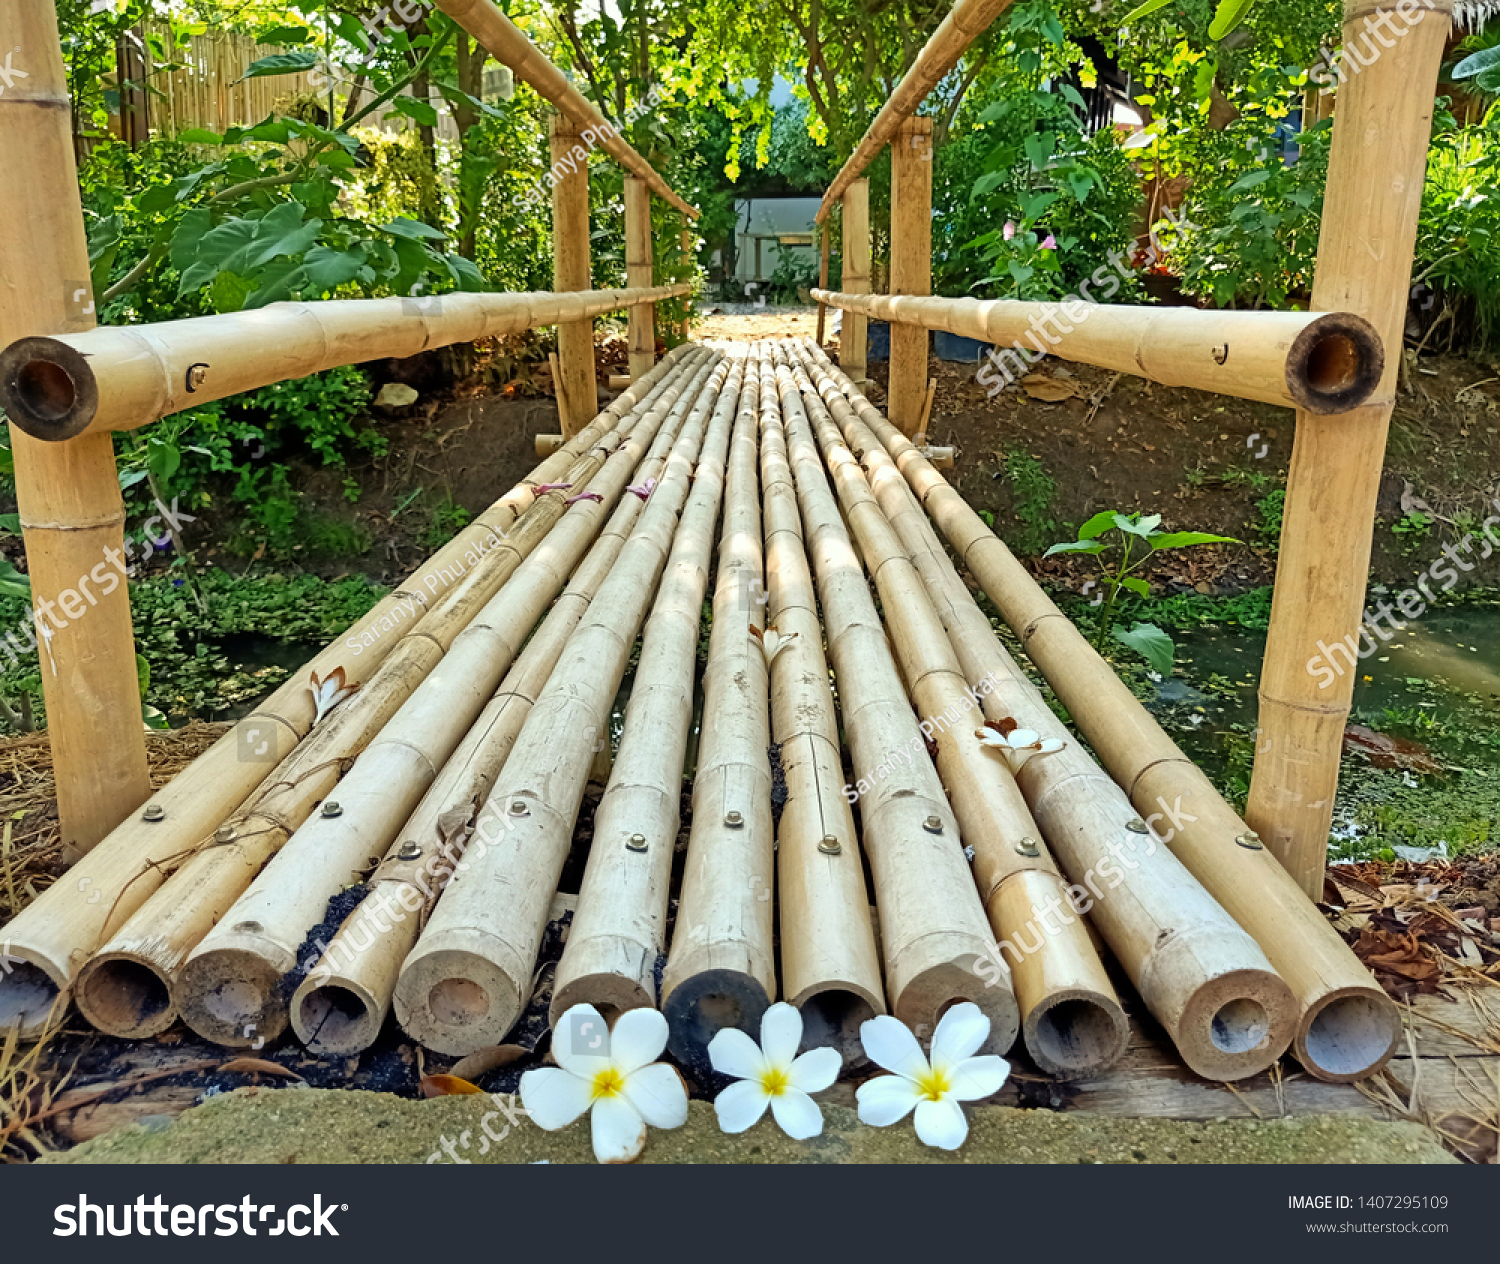 bamboo-wood-small-bridge-design-trio-stock-photo-1407295109-shutterstock